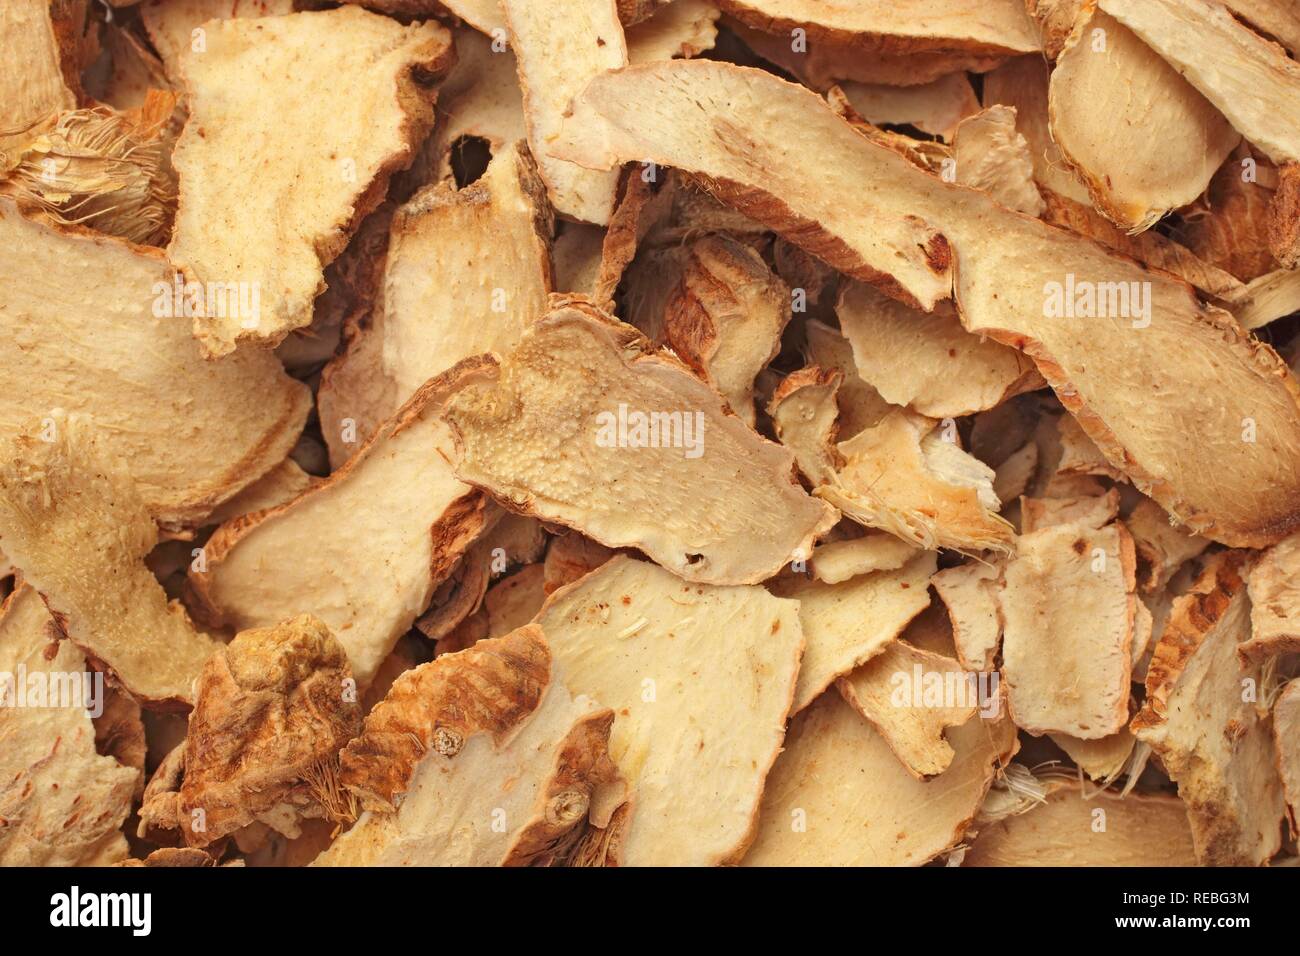 Medicinal plant Common Anemarrhena (Anemarrhena asphodeloides), Zhi Mu, dried roots Stock Photo